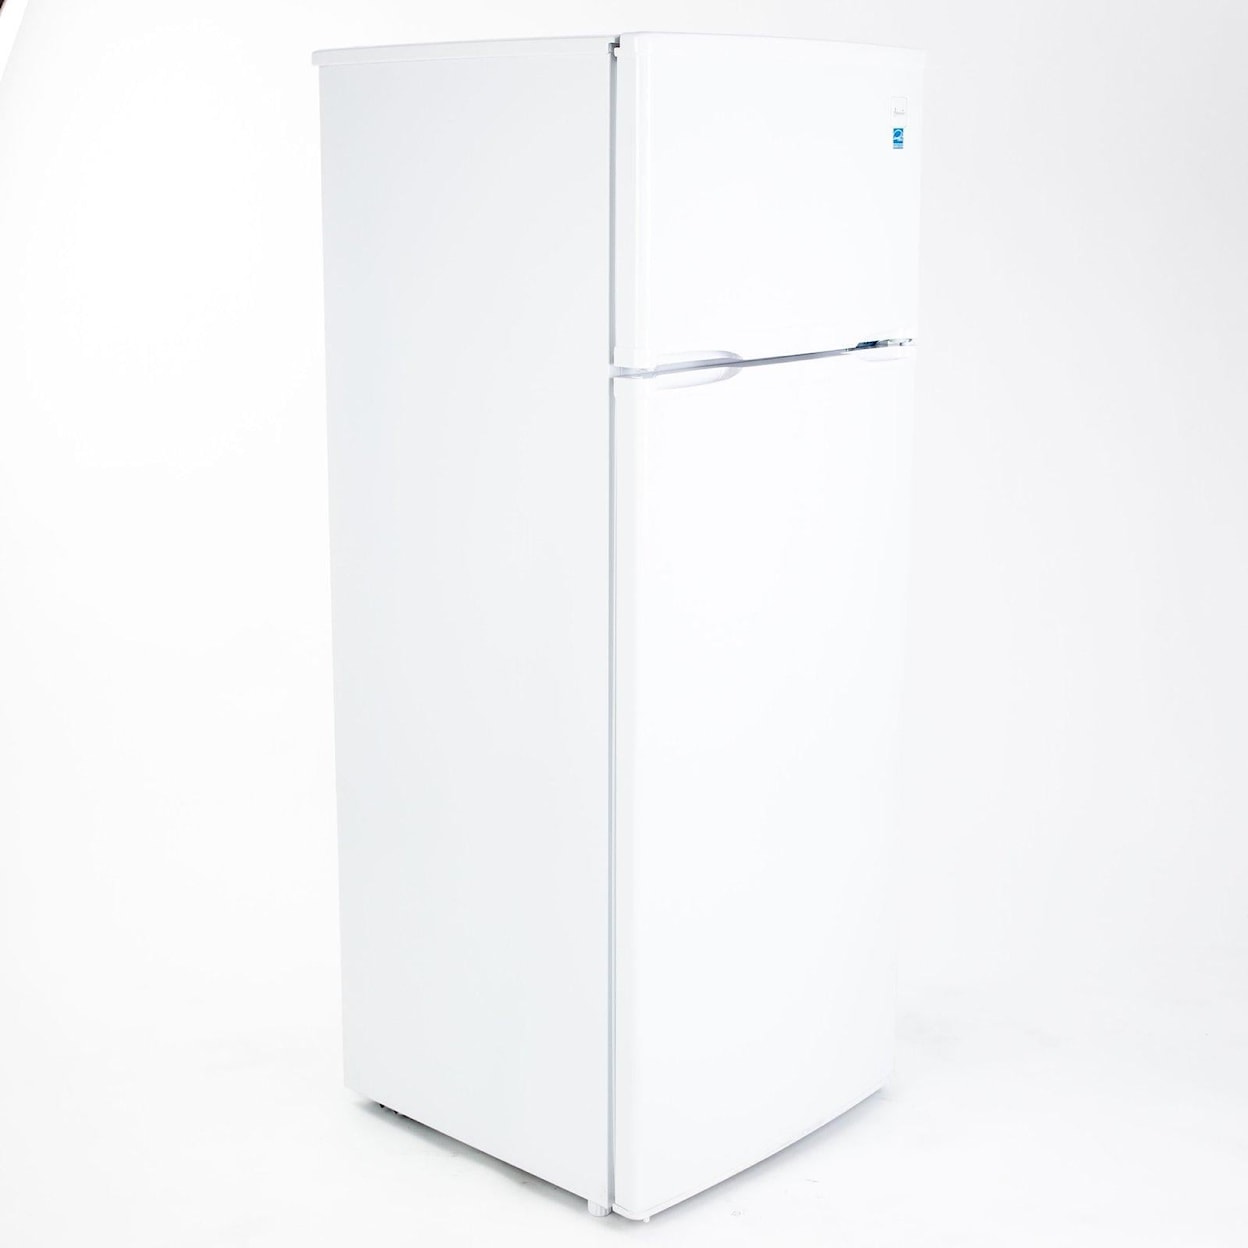 Avanti Refrigerators Compact Refrigerator